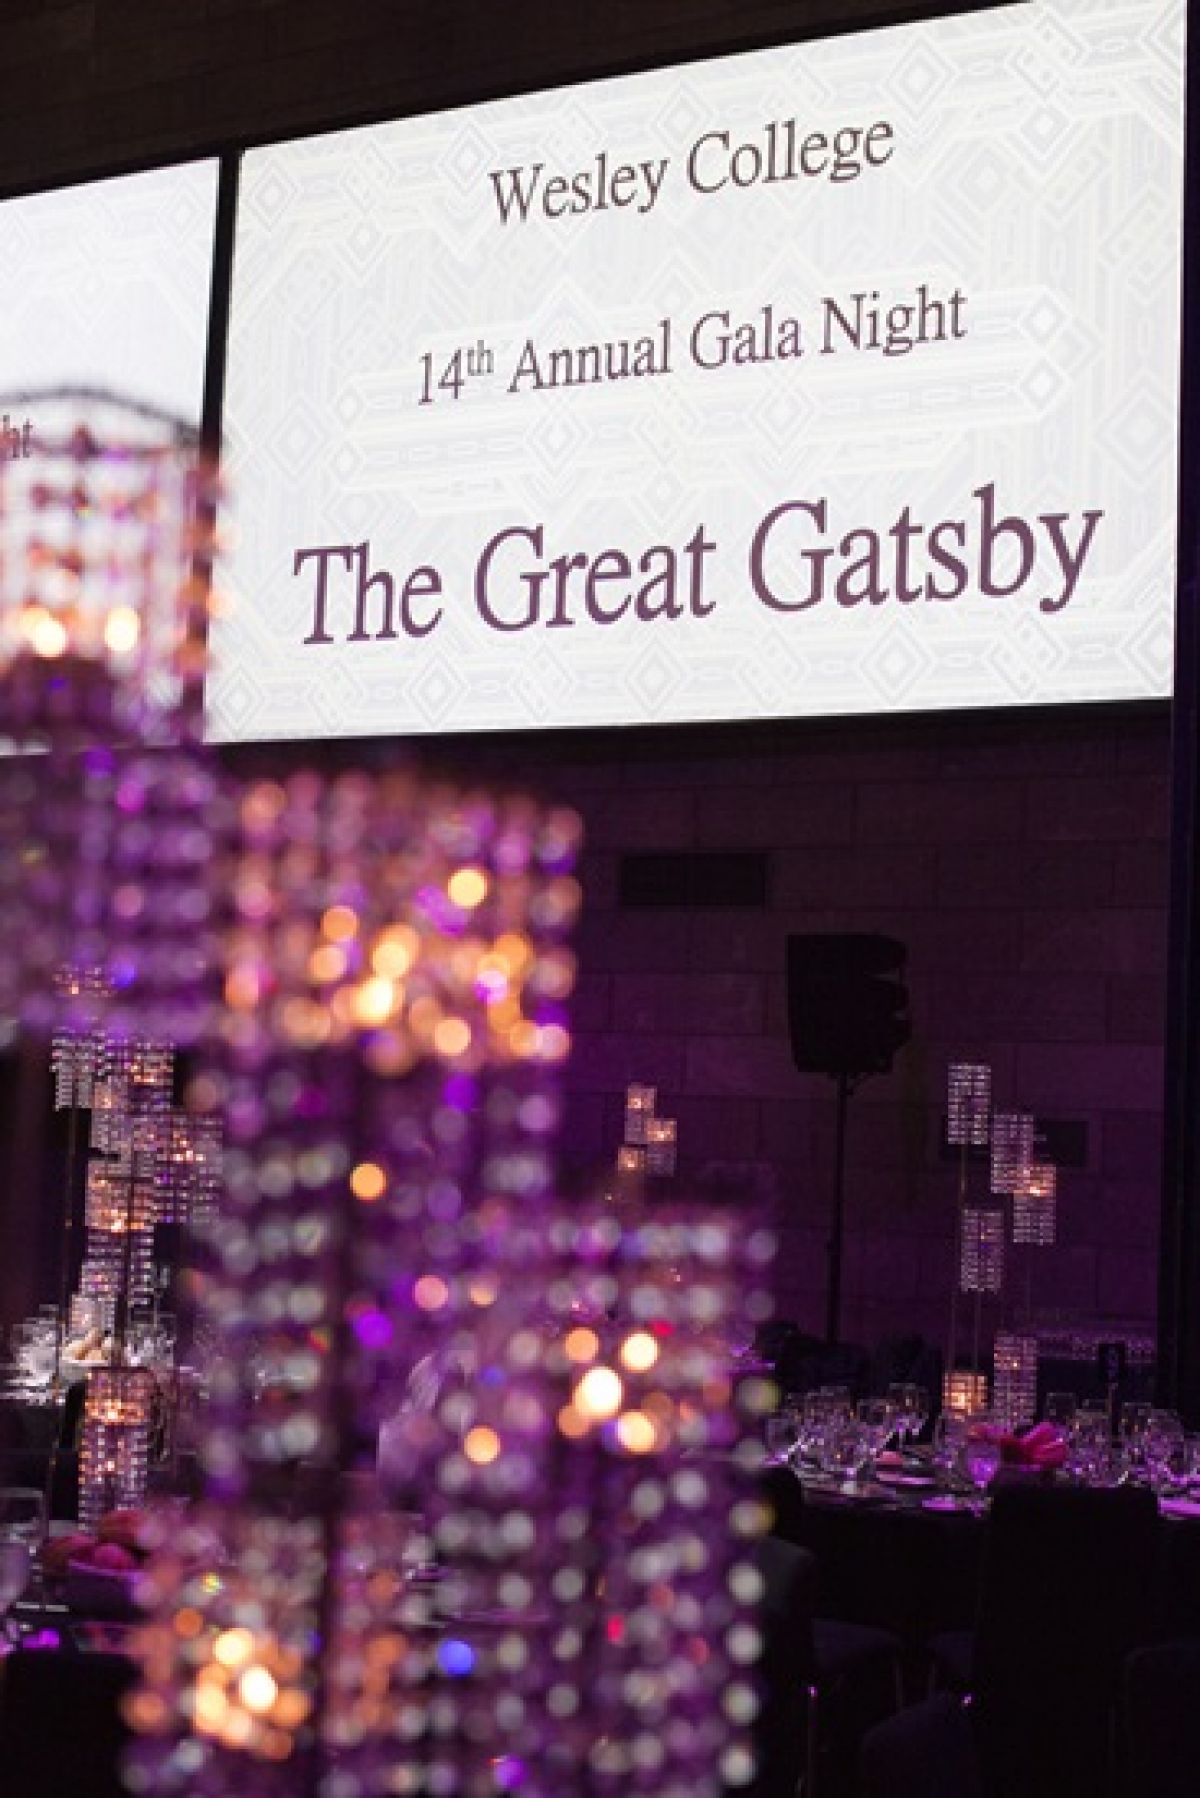 The Great Gatsby Gala Night